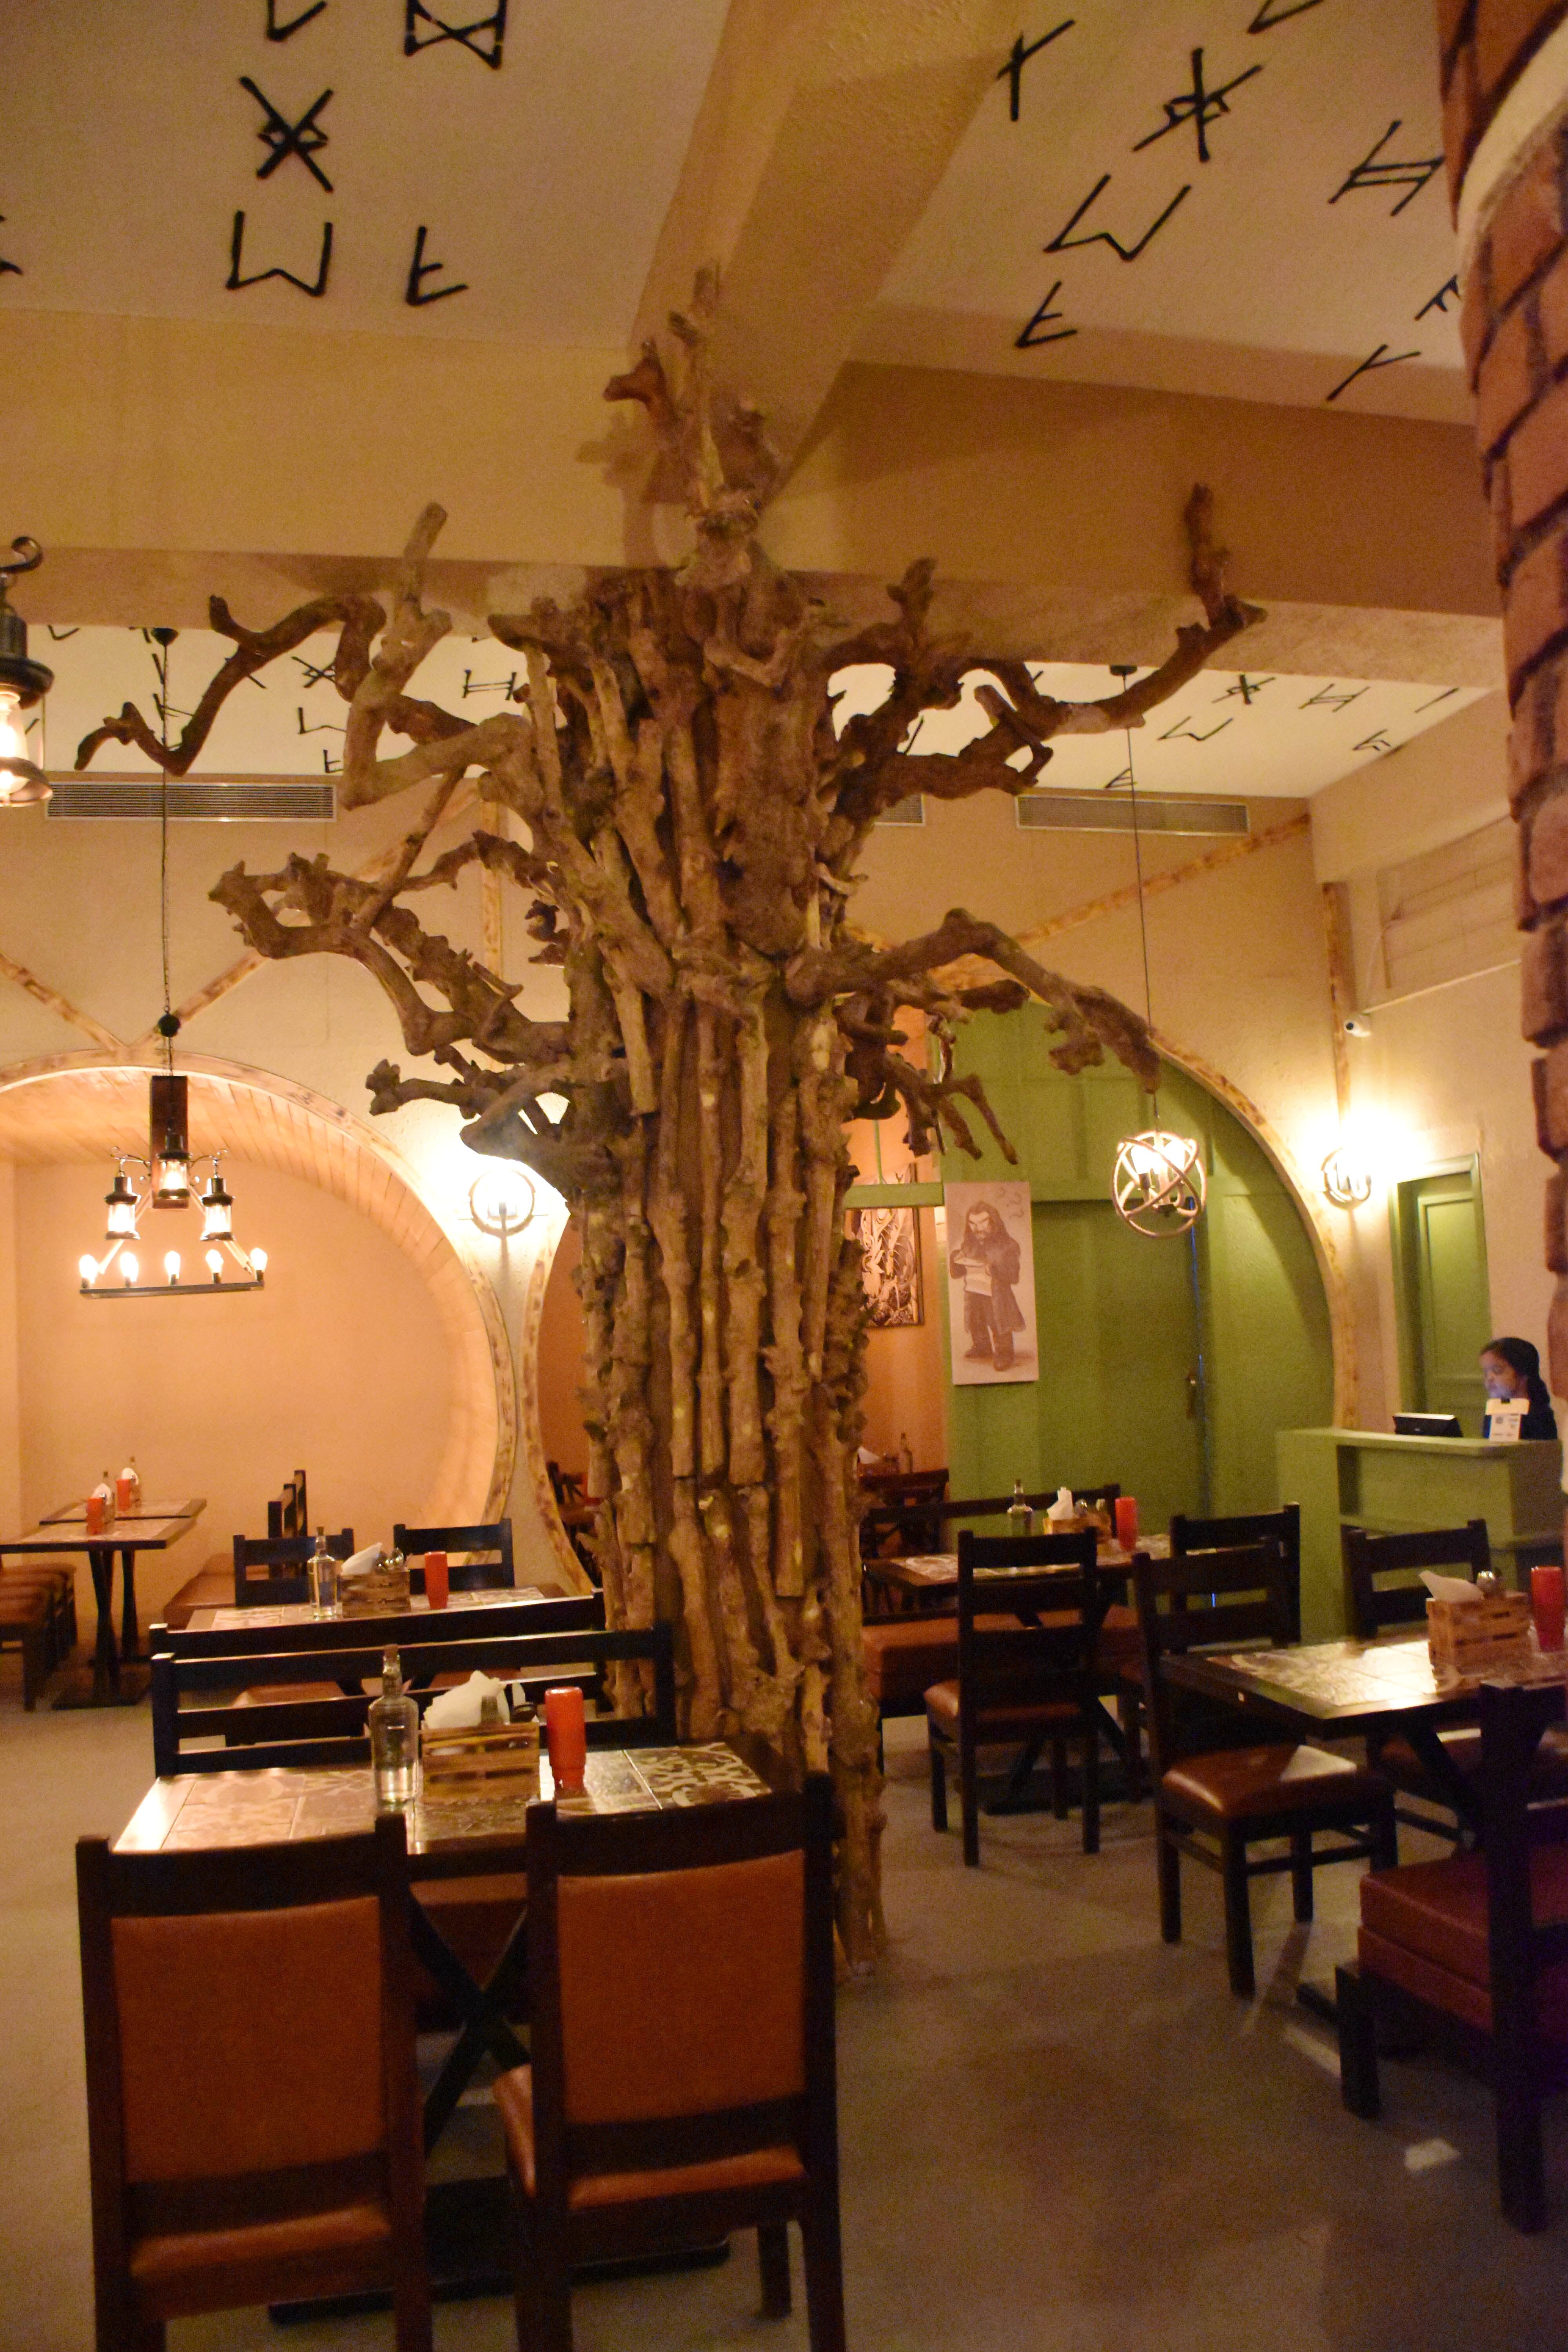 Restaurant,Building,Interior design,Room,Café,Tree,Table,Business,Coffeehouse,Organization